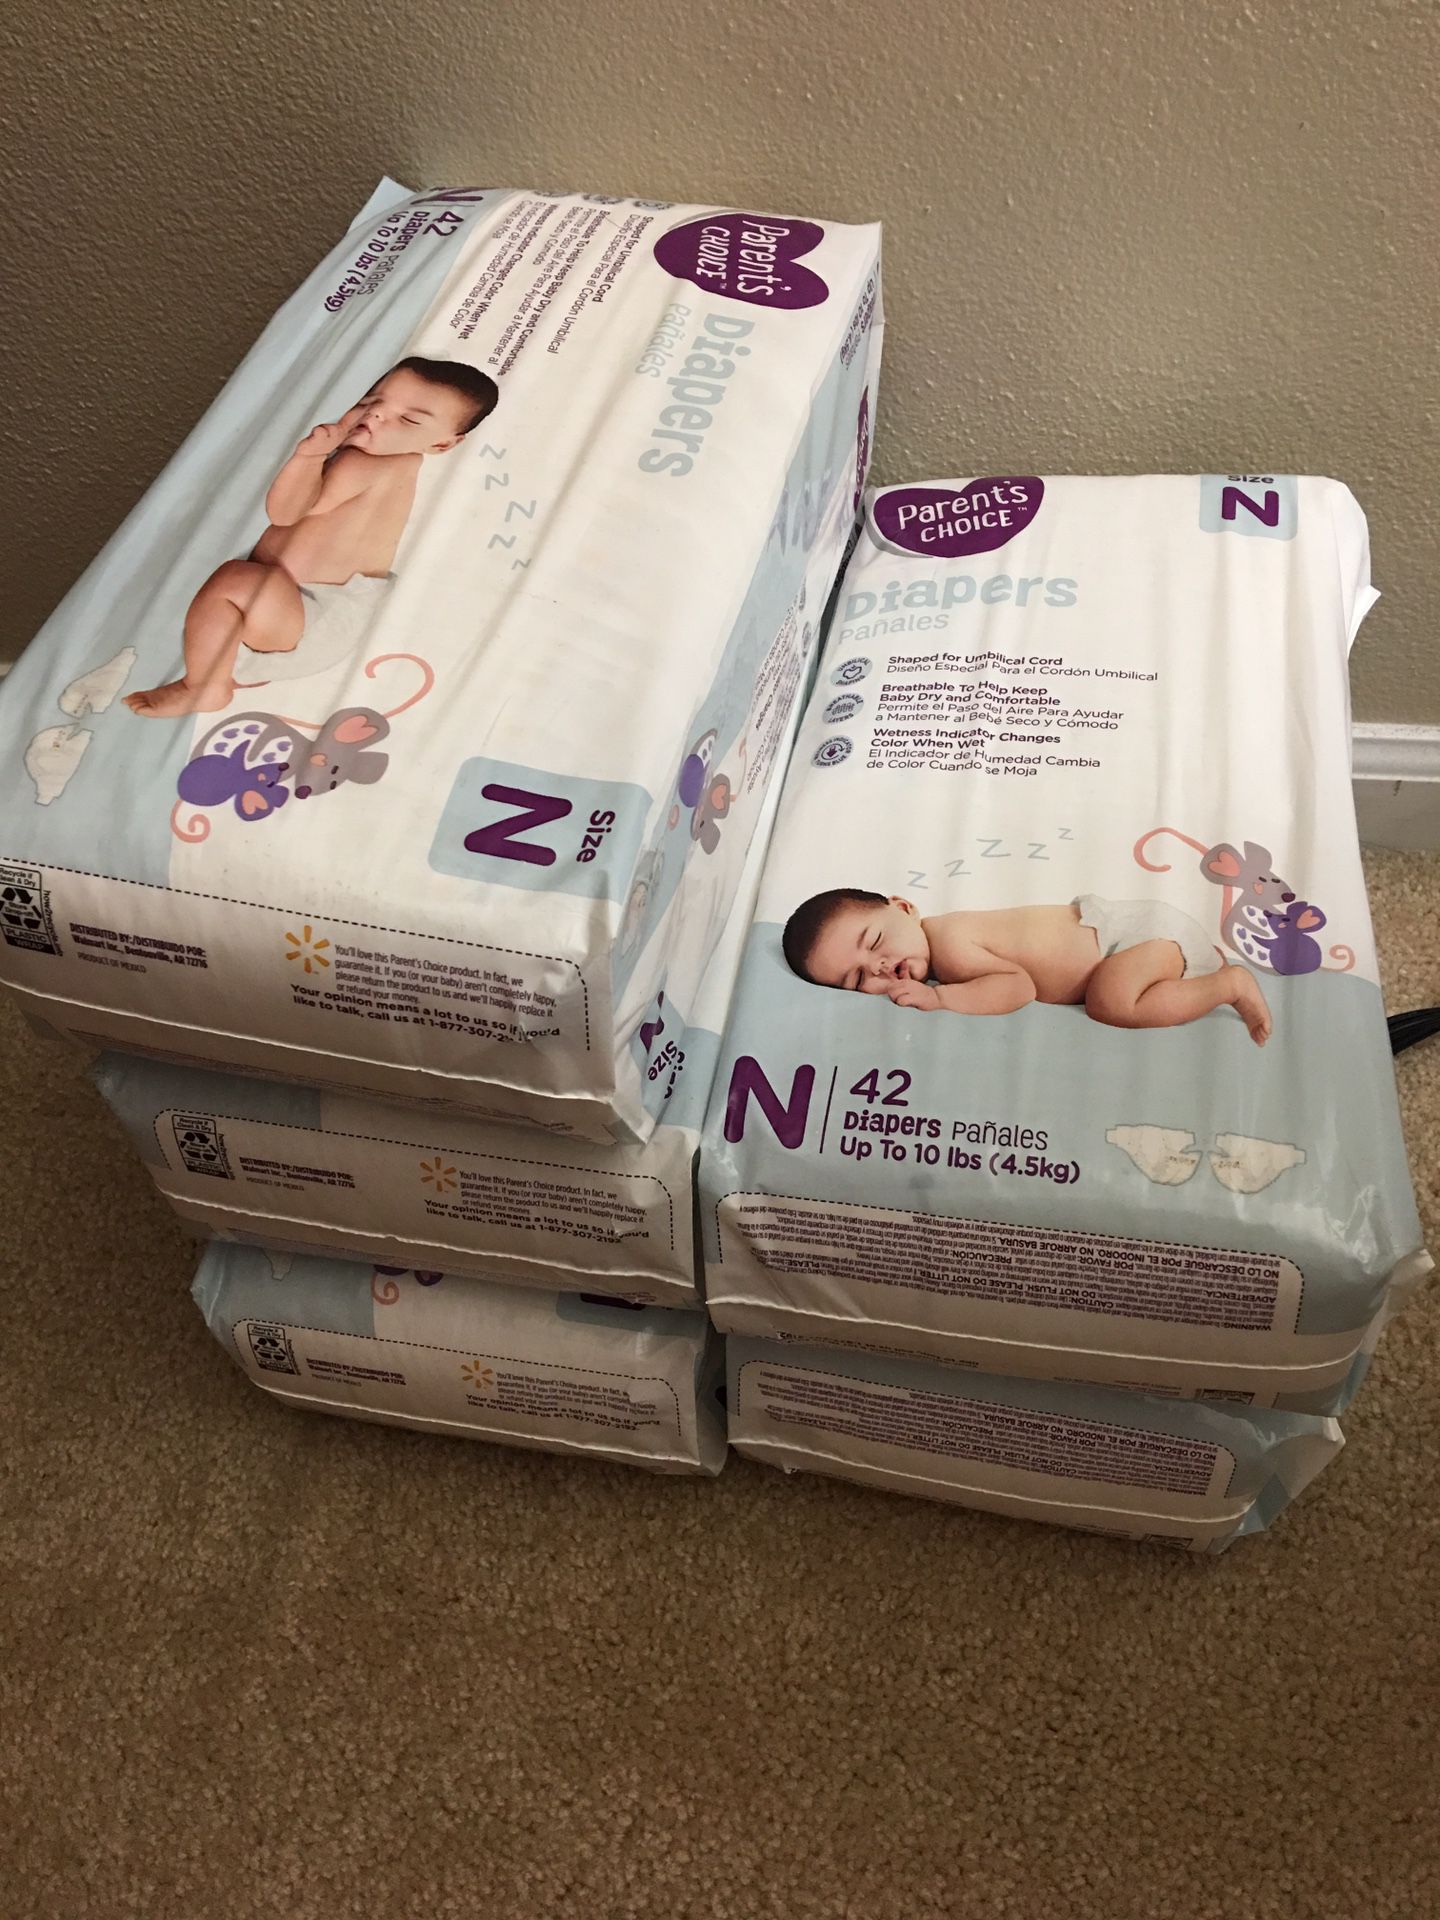 NEW UNOPENED- Newborn diapers 5 bags -210 diapers